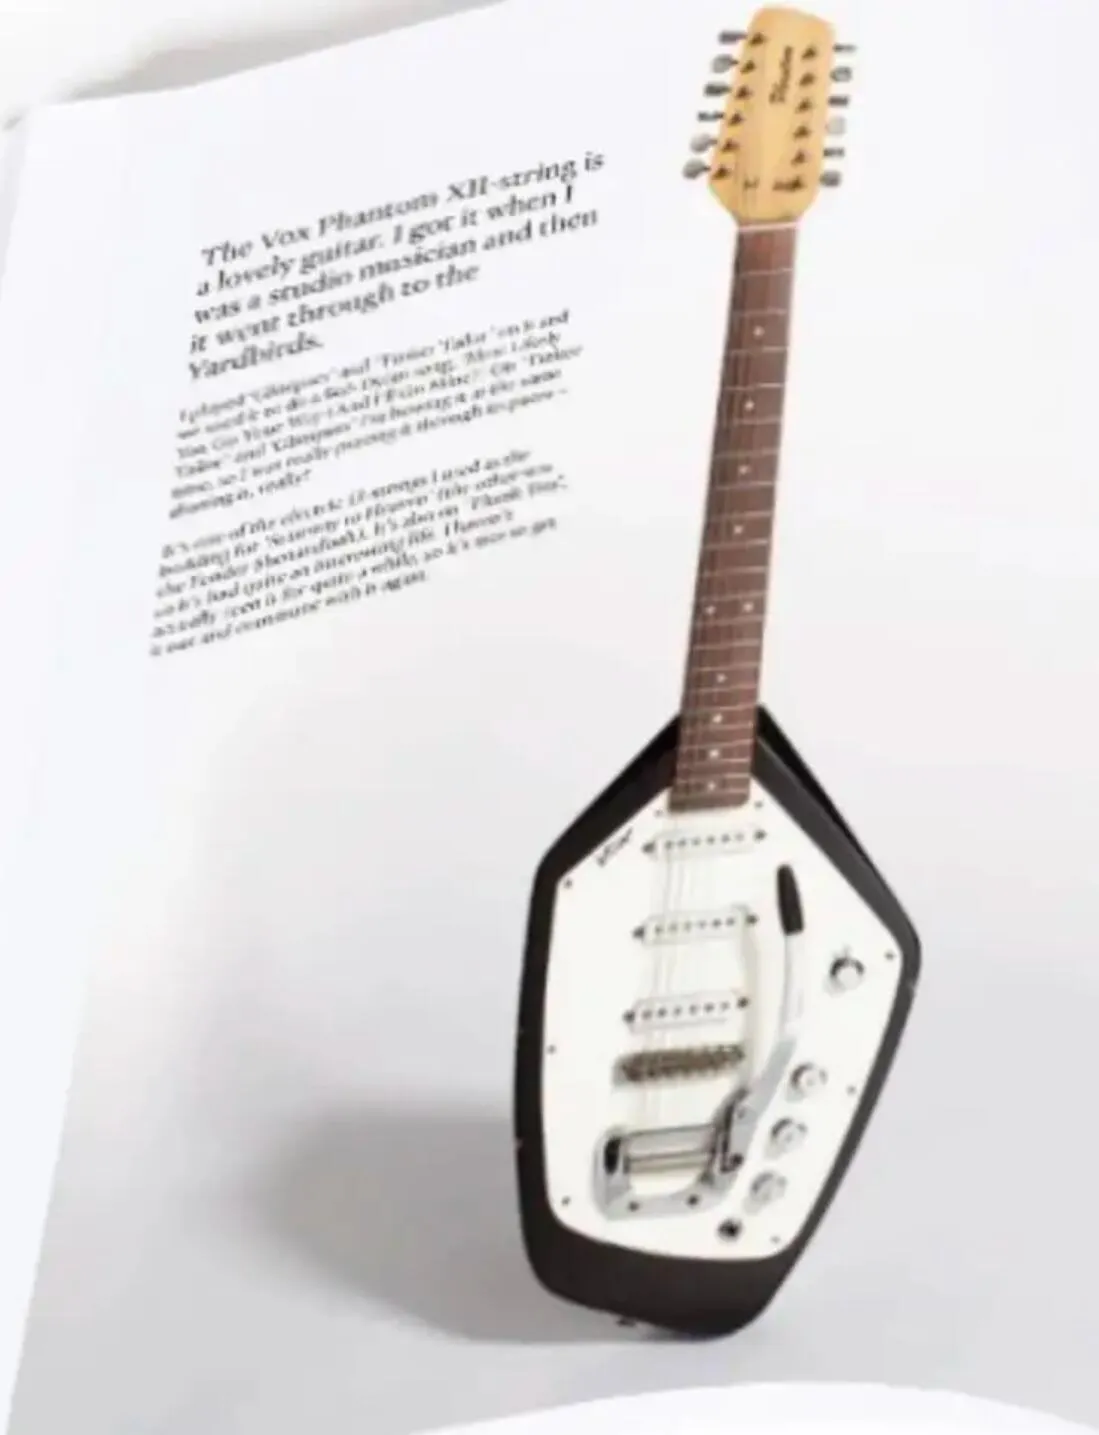 In Stock Vox Phantom XII Tuxedo Jimmy Page Yardbirds Teardrop 12 Strings Black Solid Body Electric Guitar SSS Pickups Bigs Tremolo Vibrola Vintage Tuners